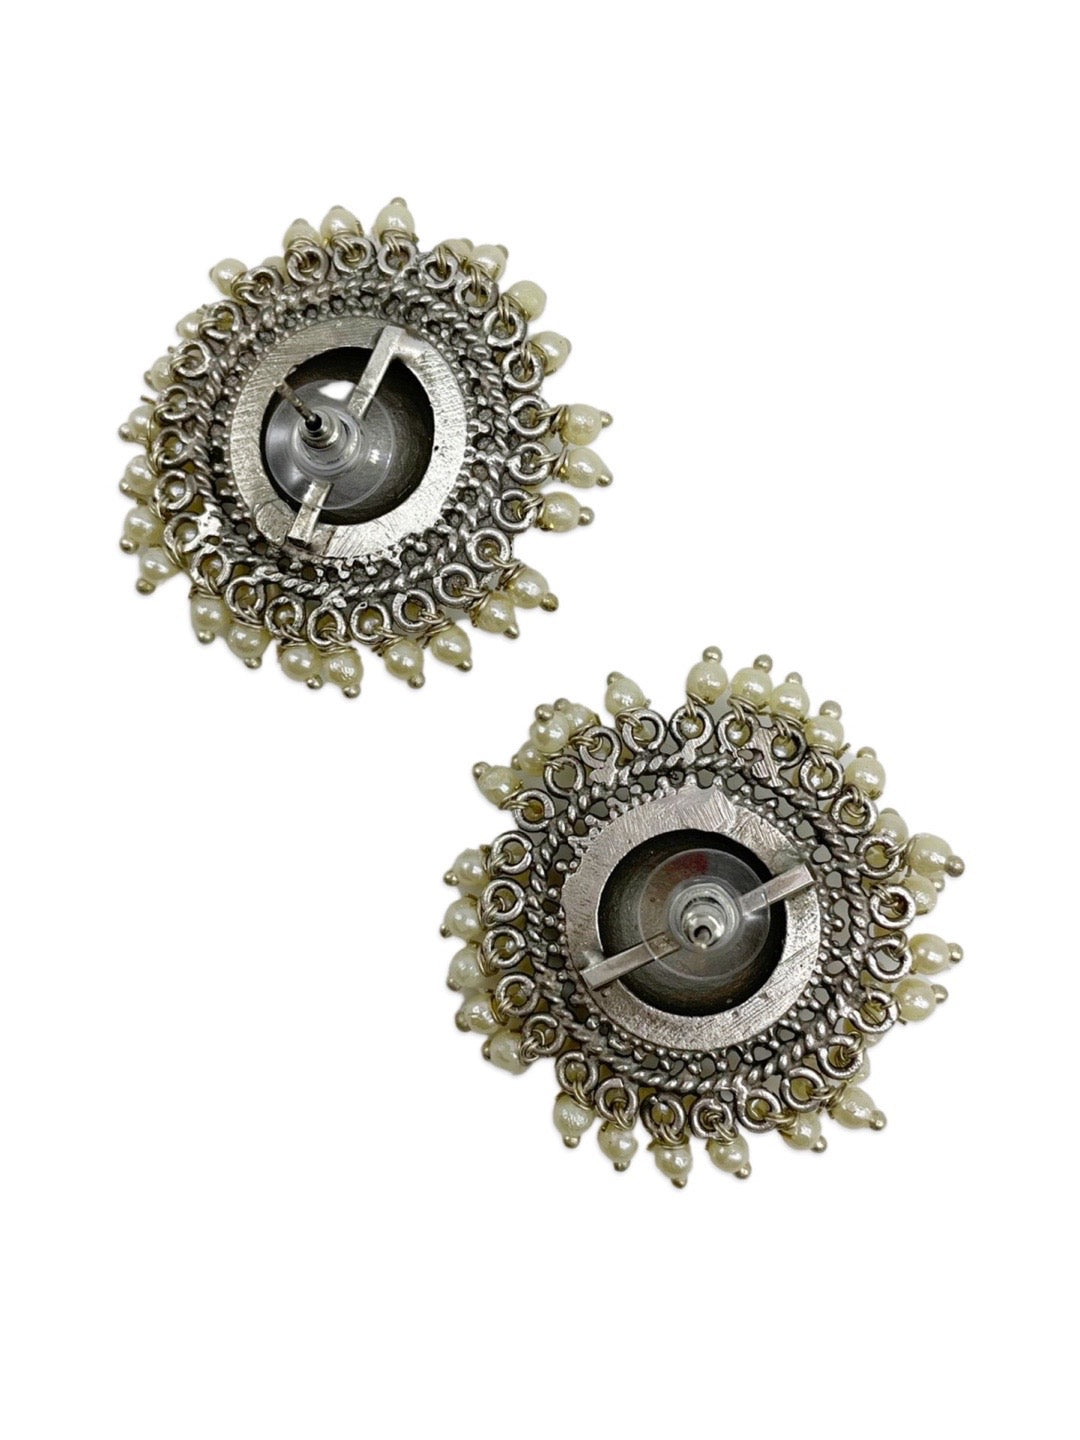 Mughal Style German Oxidized Silver Flower Designs Studs Earrings